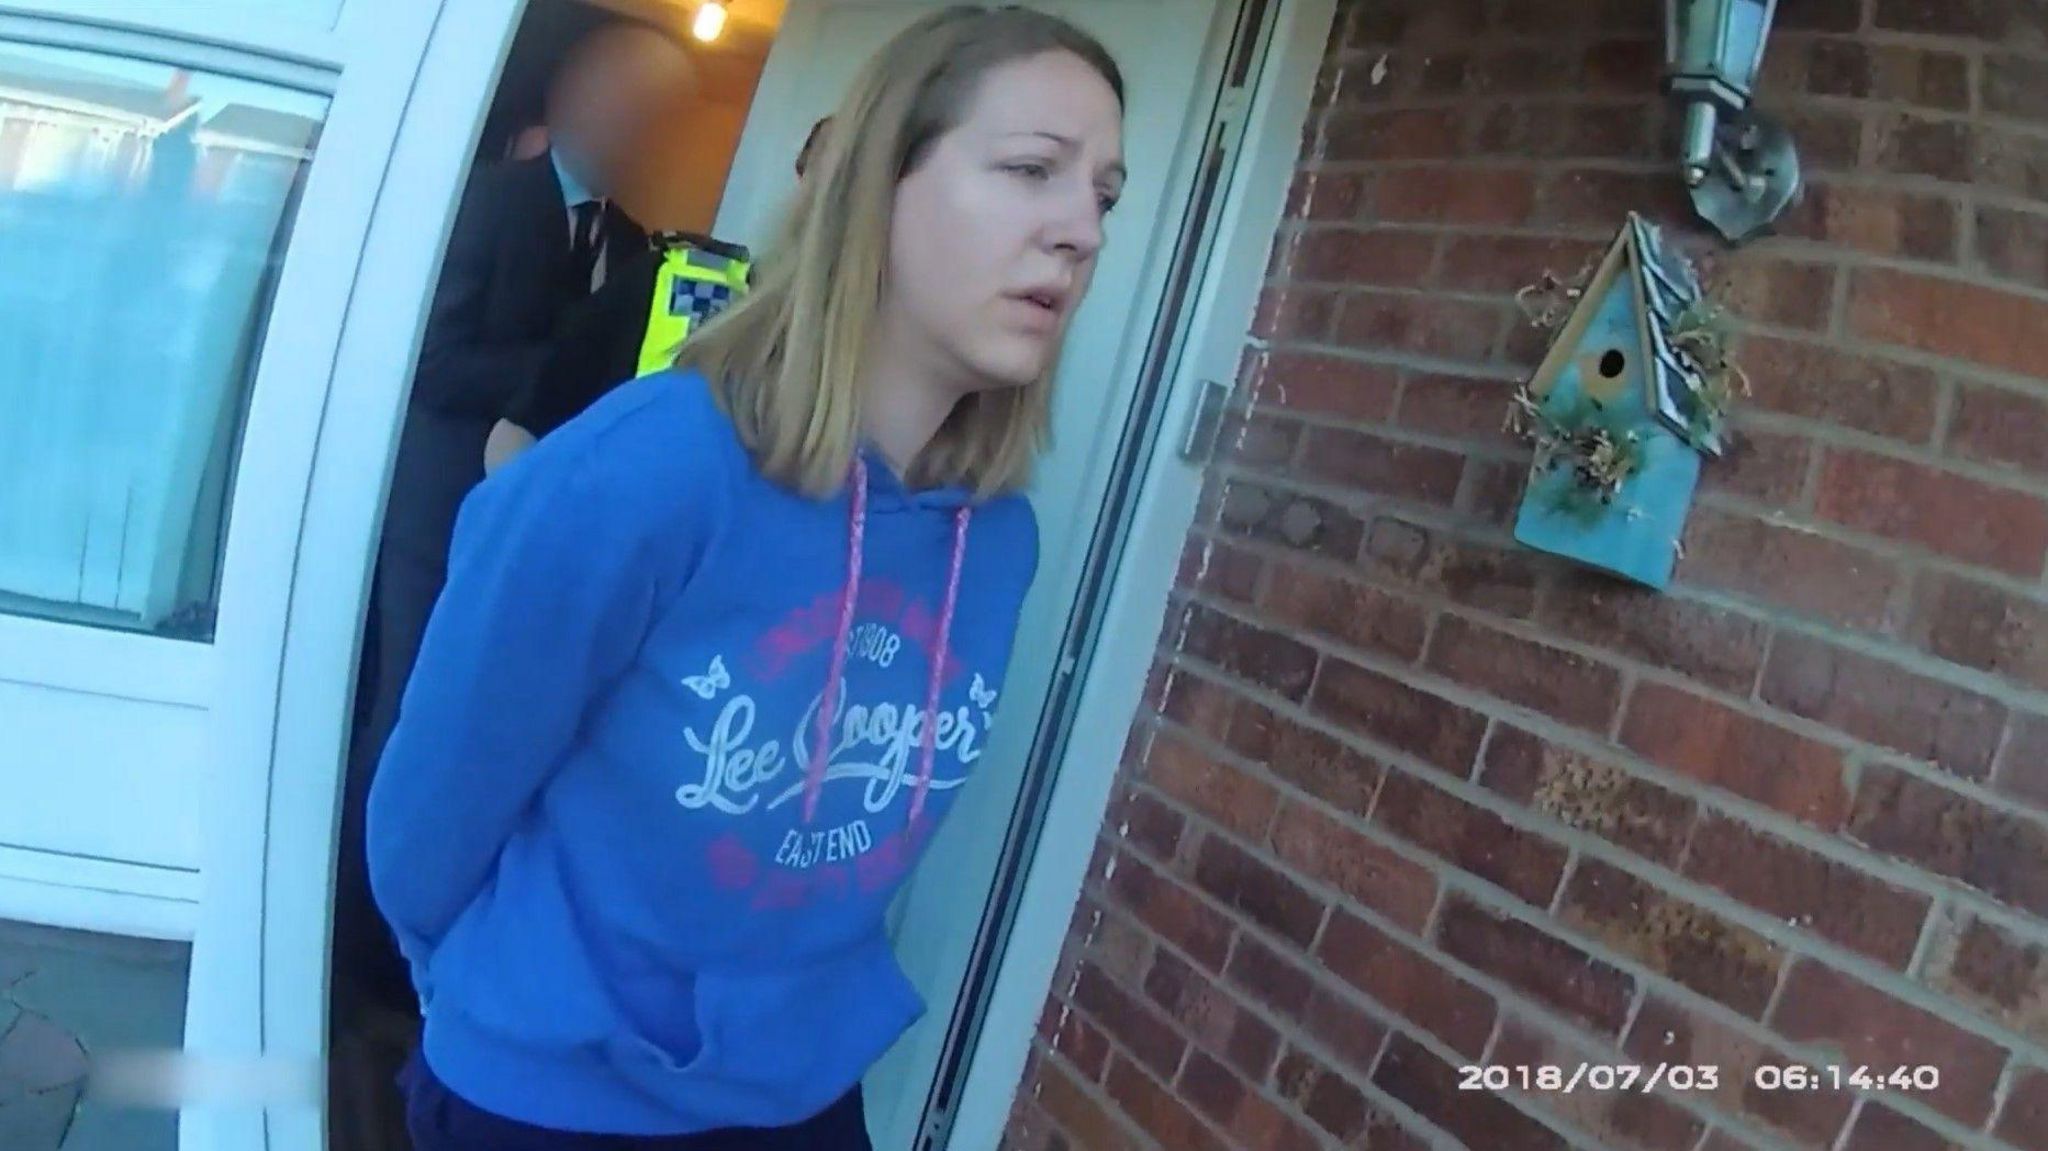 Letby leaving her home under arrest